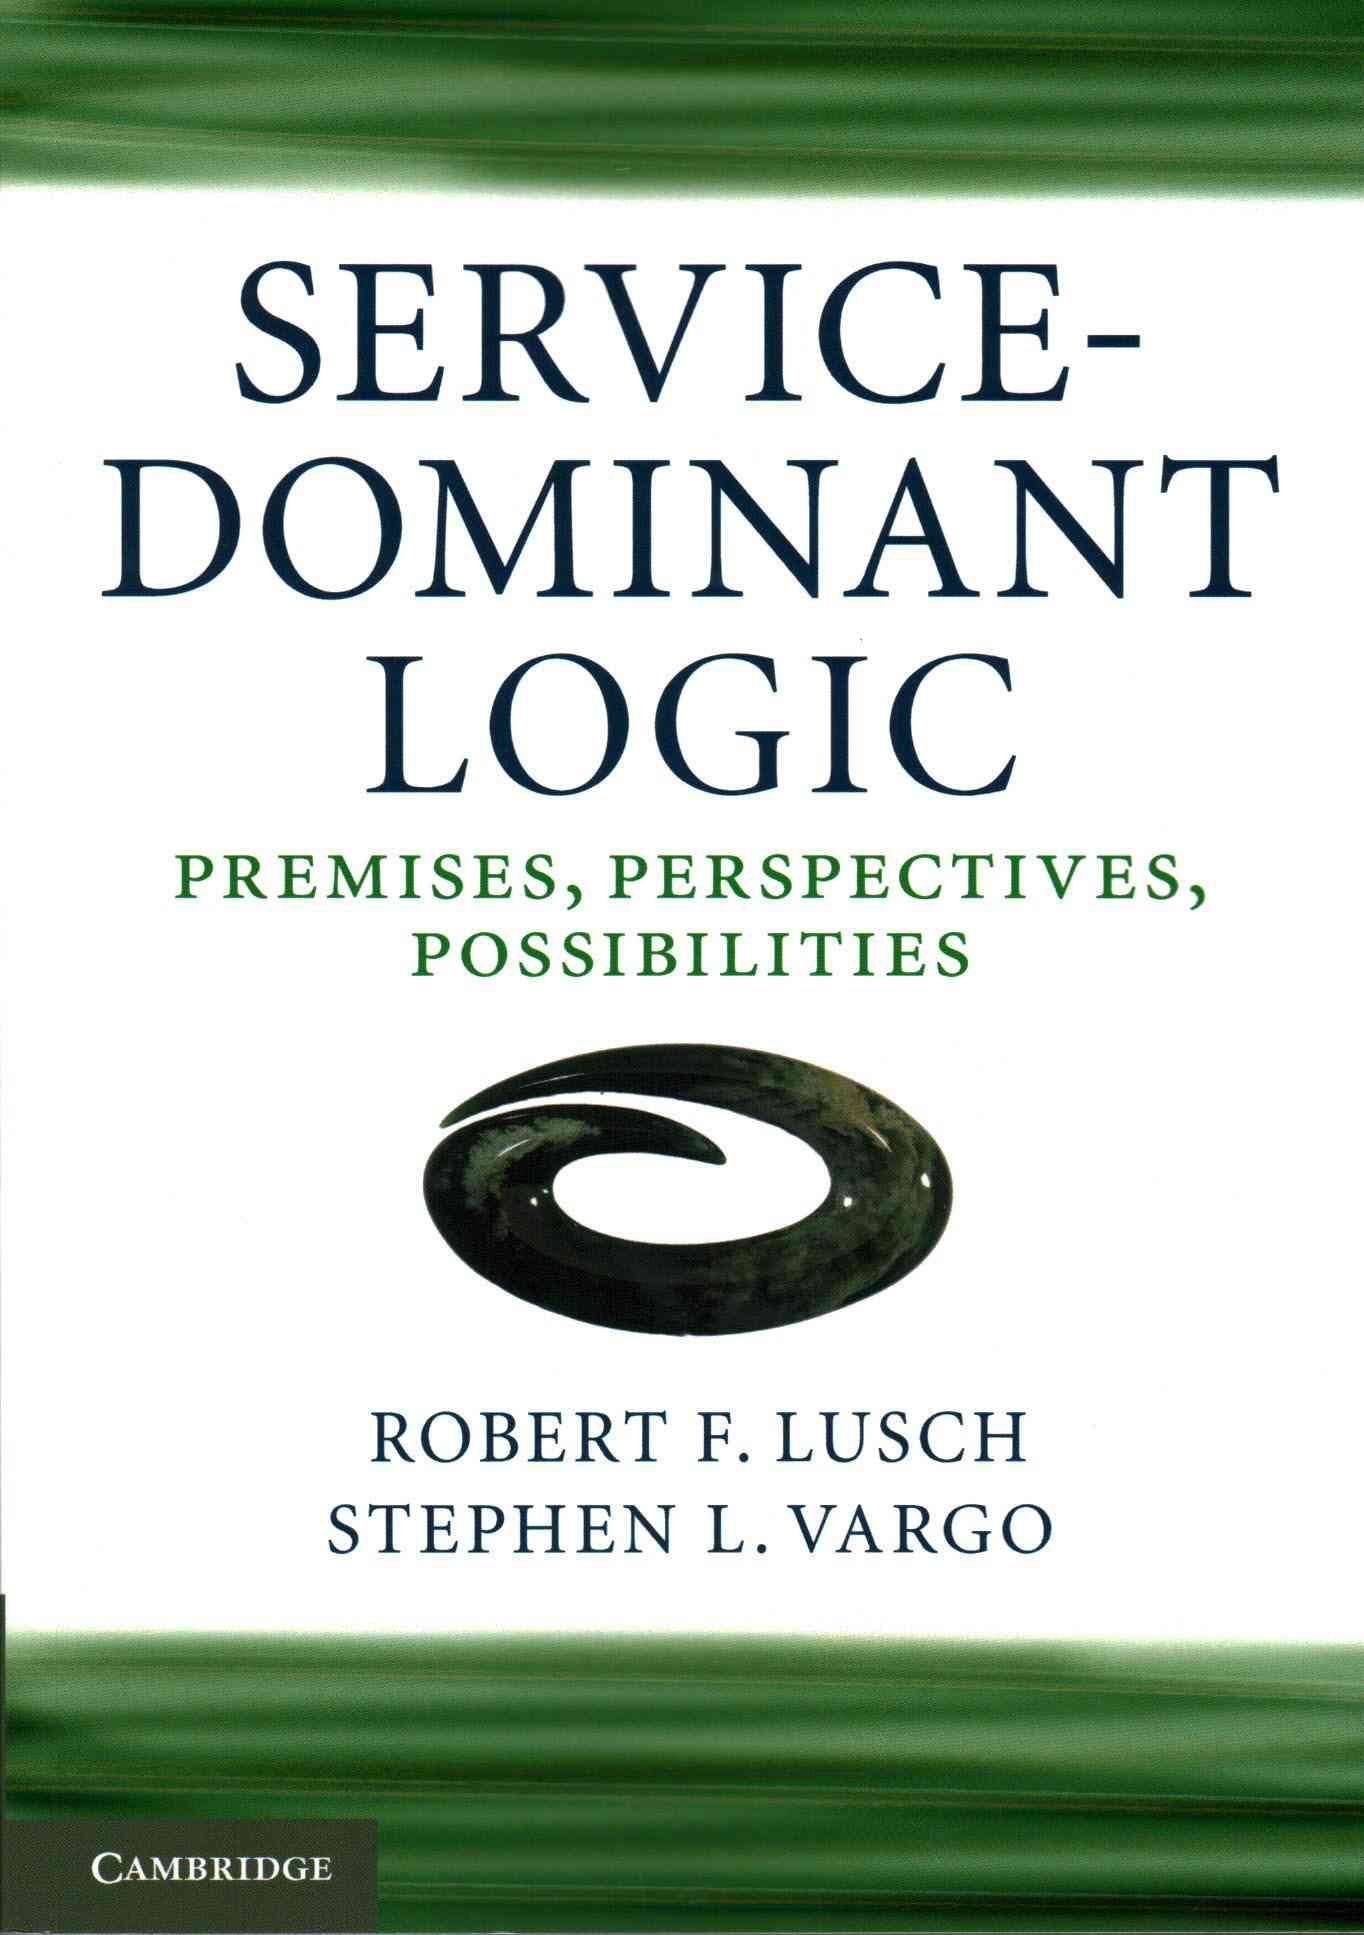 Service-Dominant Logic